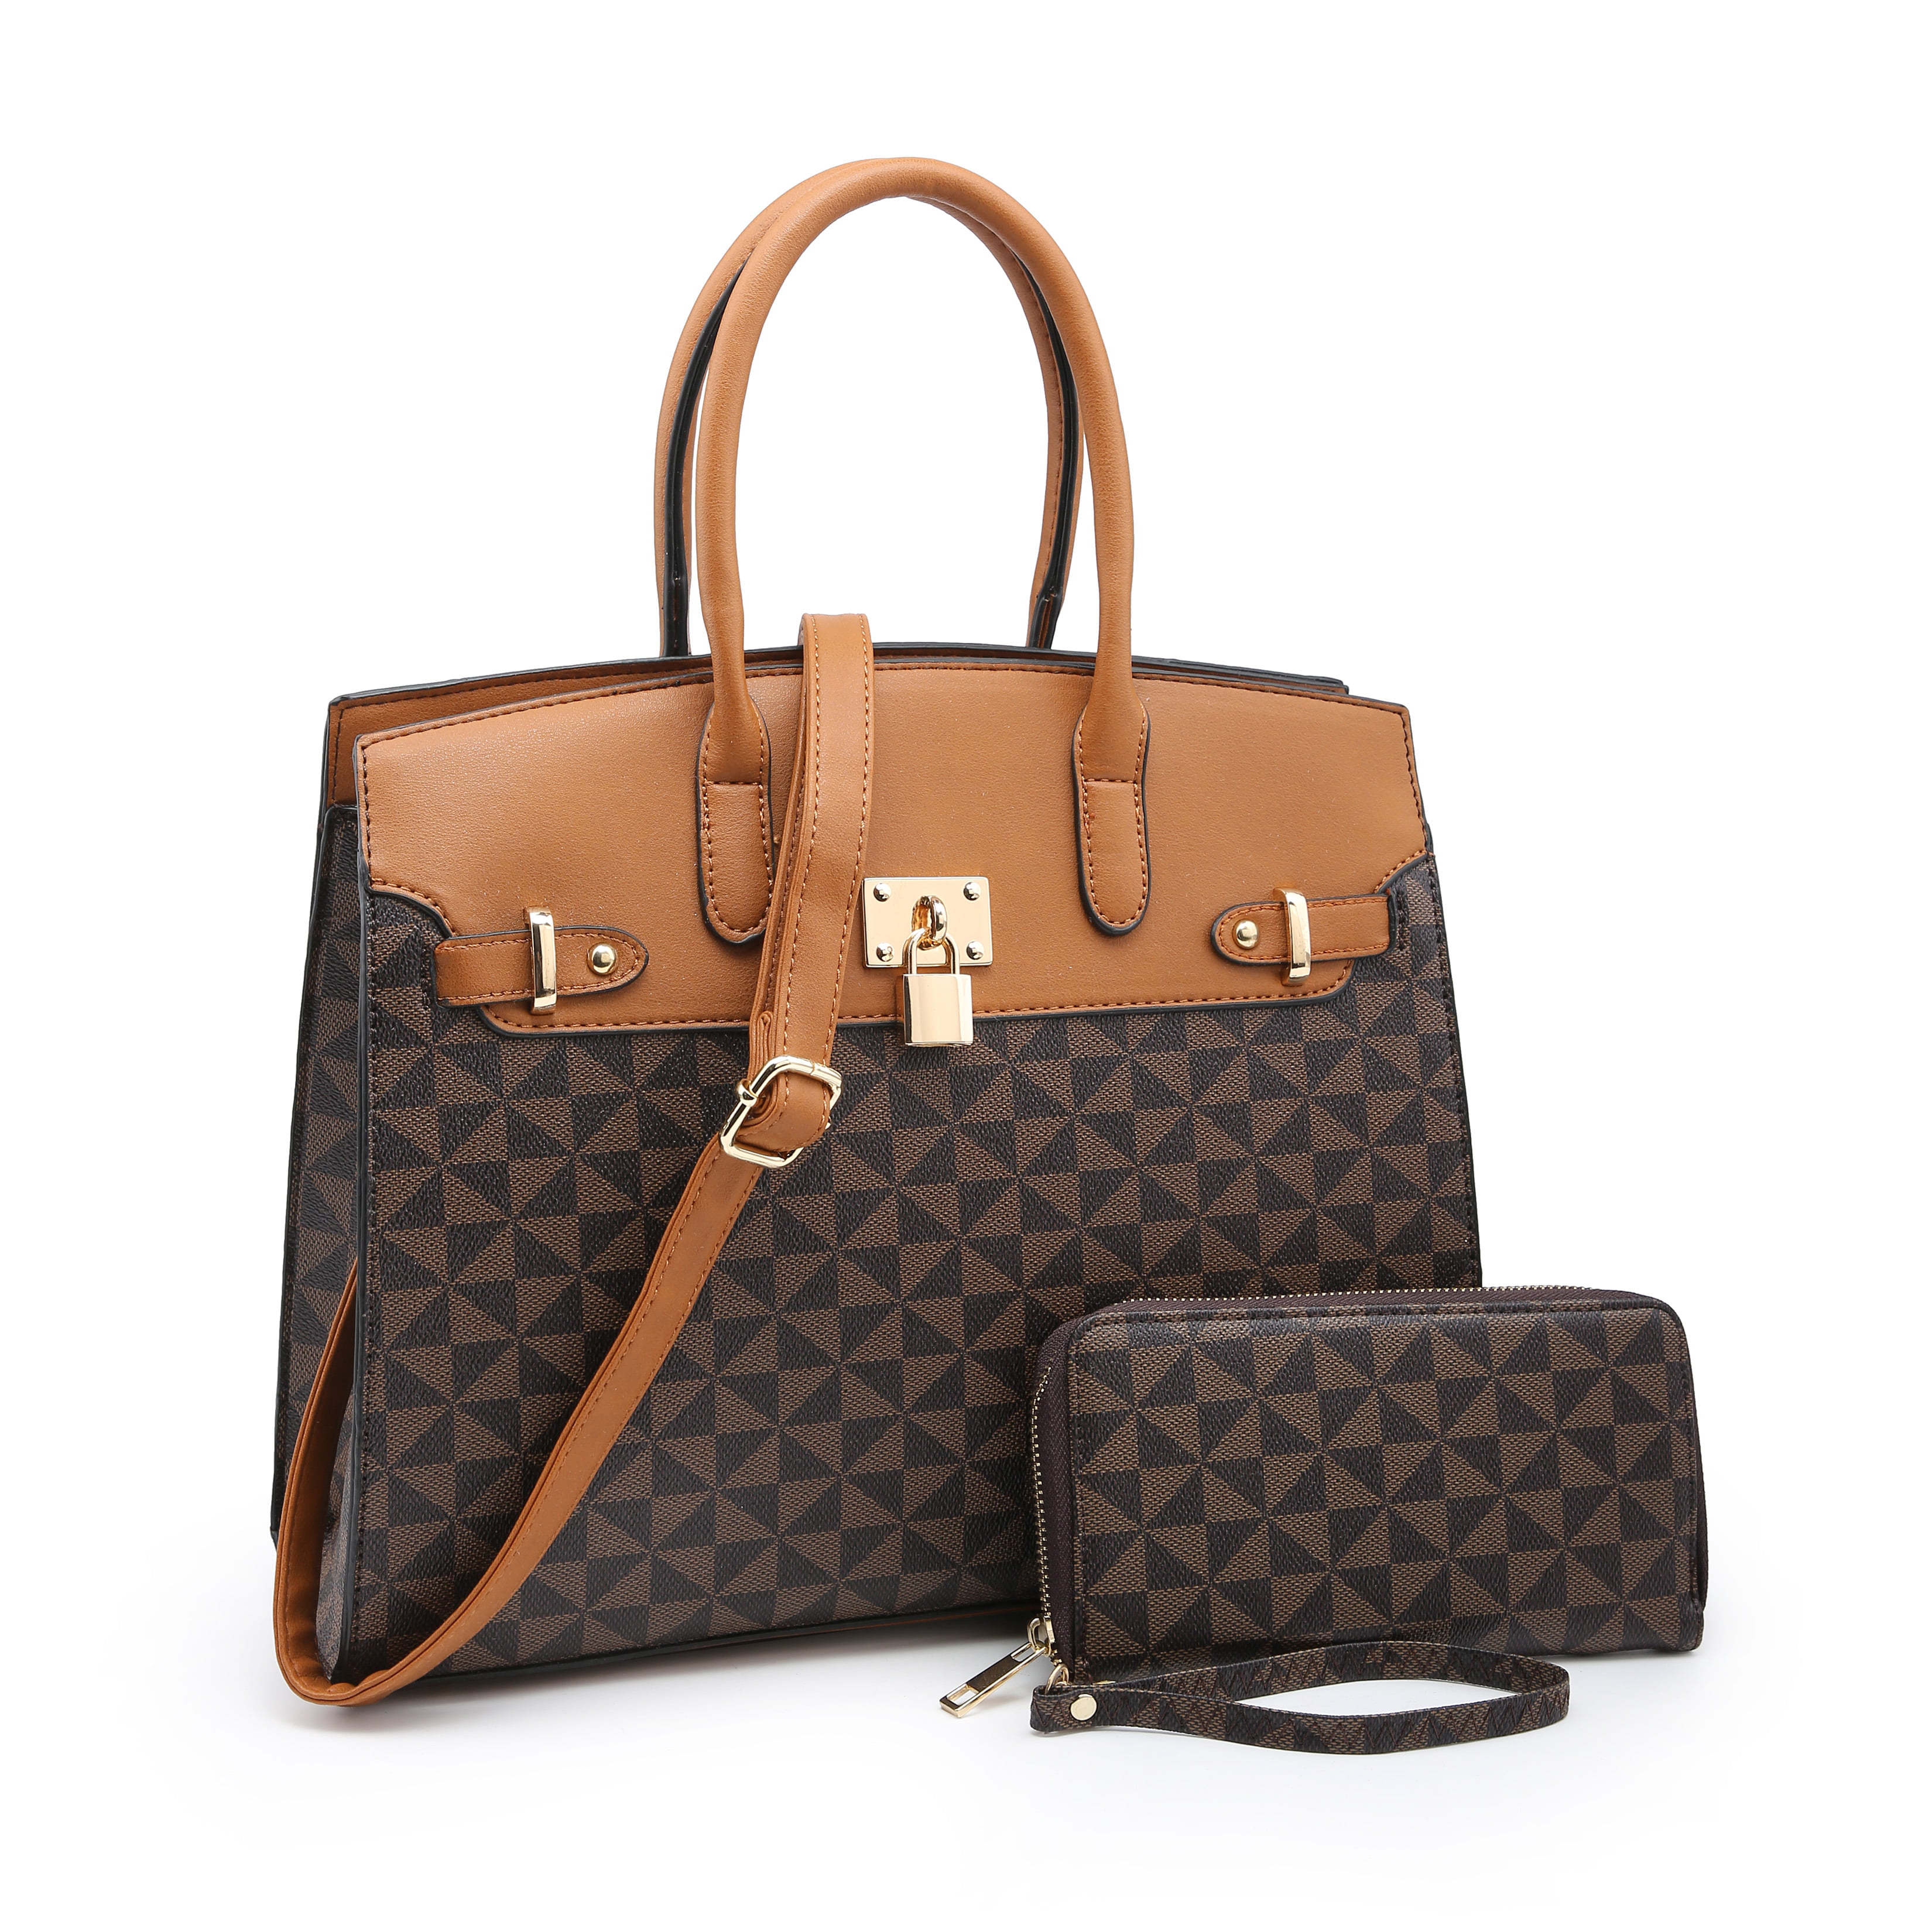 Women Purses and Handbags Fashion Tote Large Shoulder Bag Top Handle Satchel Purse Set 2pcs 